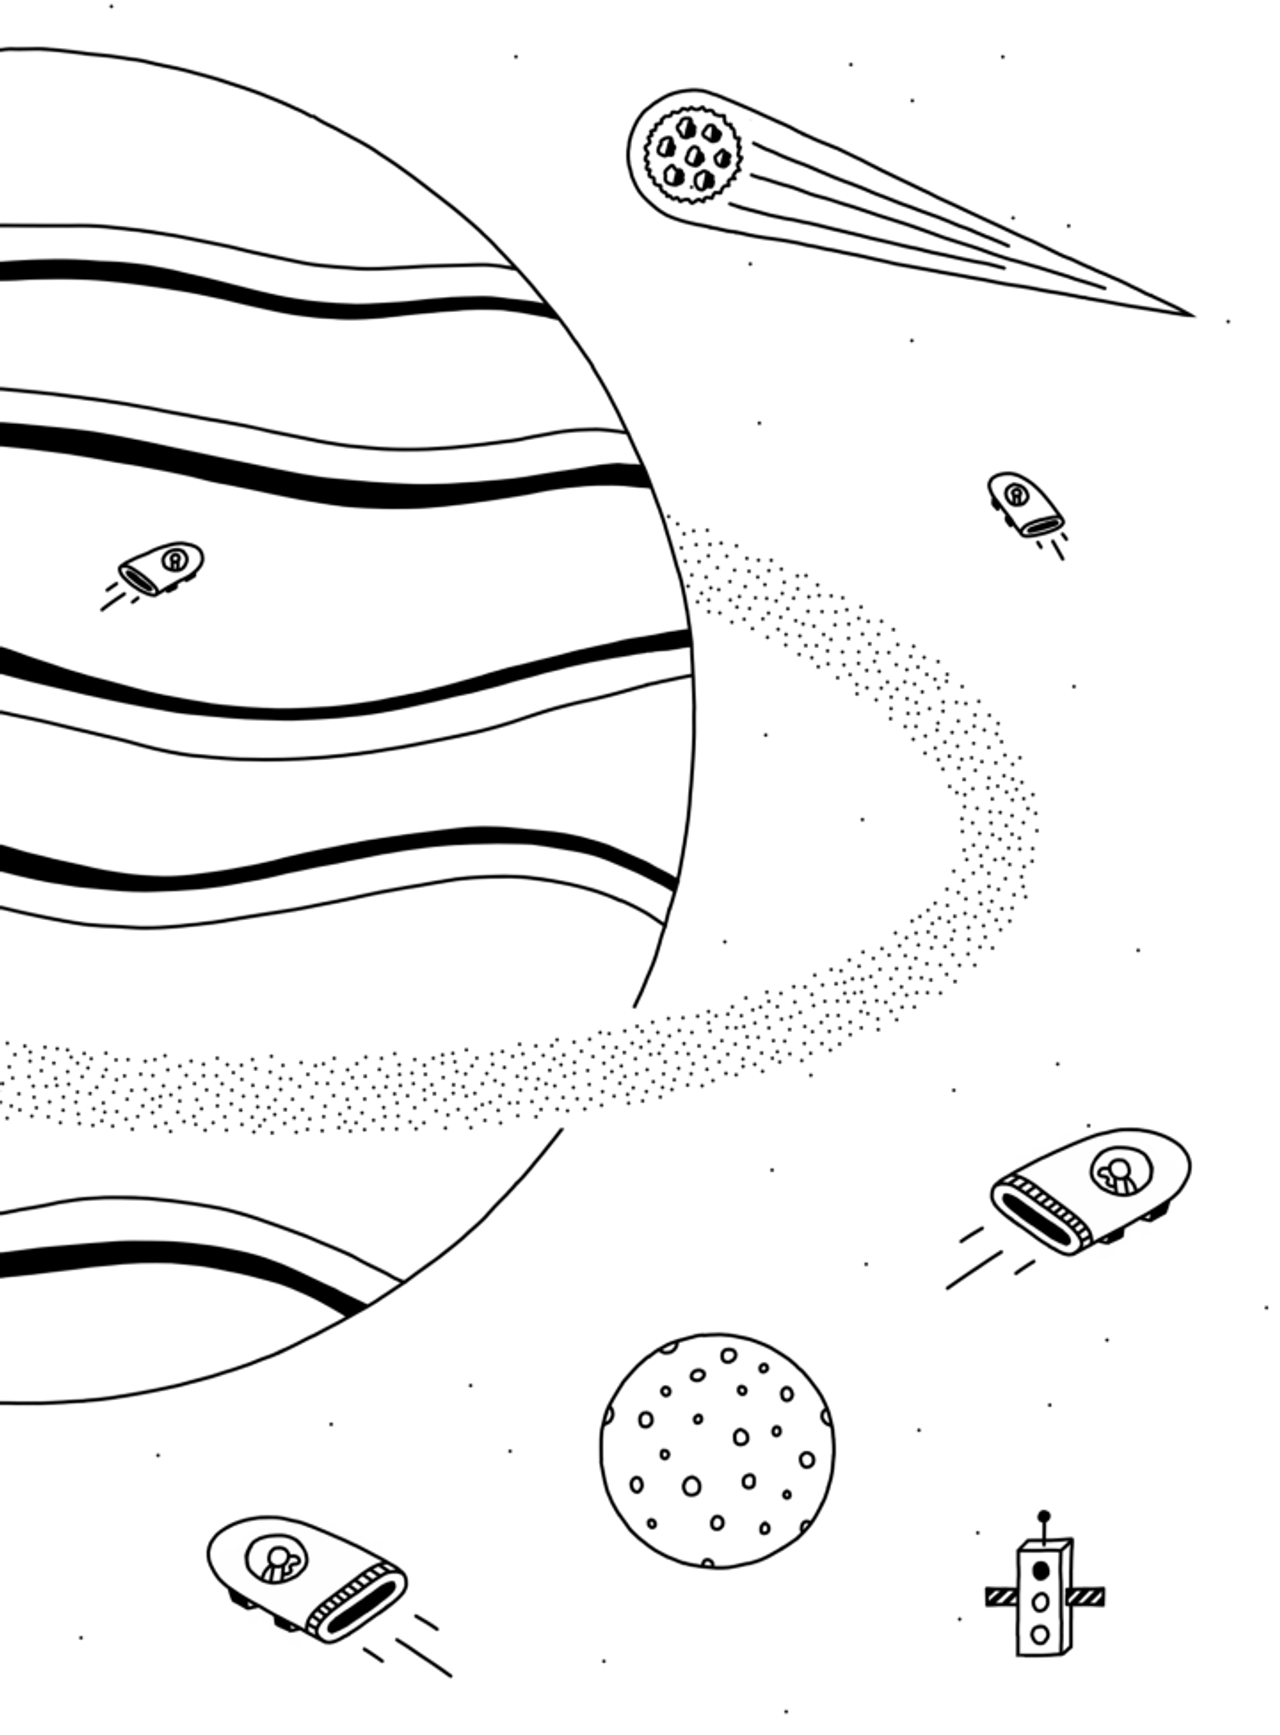 Space traffic Illustration